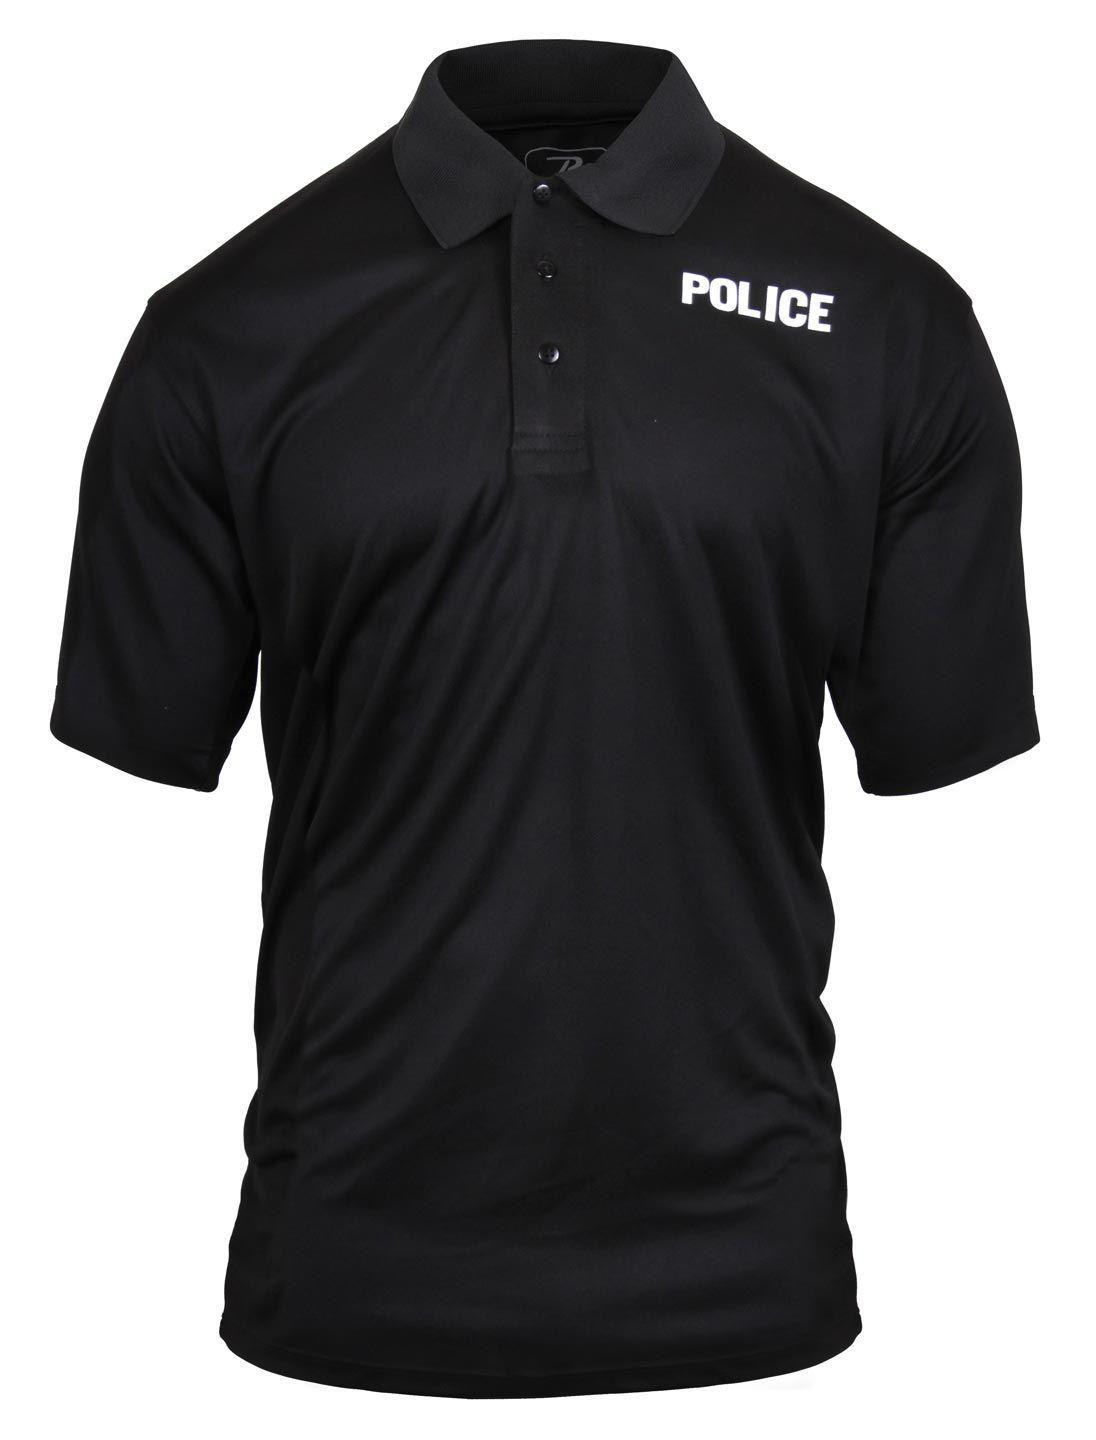 #2 - Rothco Svedtransporterende Polo T-shirt (Black / Police, XL)